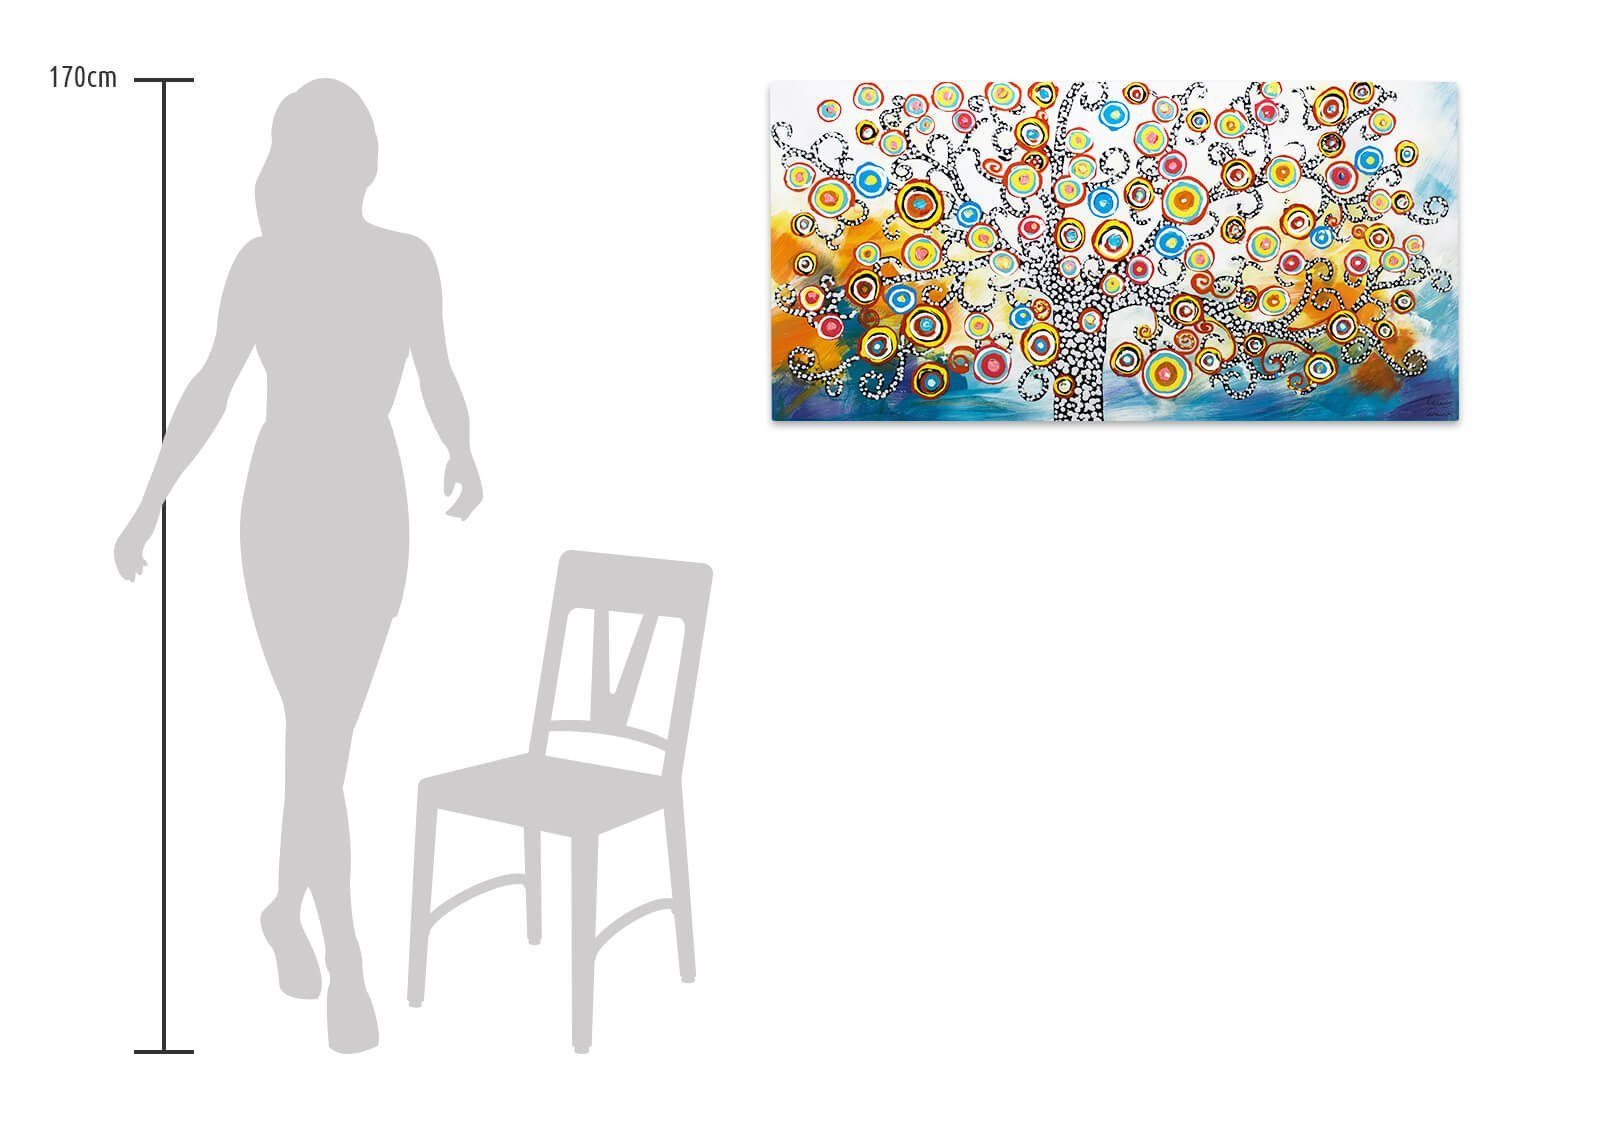 100% Gemälde of Wohnzimmer cm, Leinwandbild HANDGEMALT KUNSTLOFT Wandbild Oracle 120x60 Insights